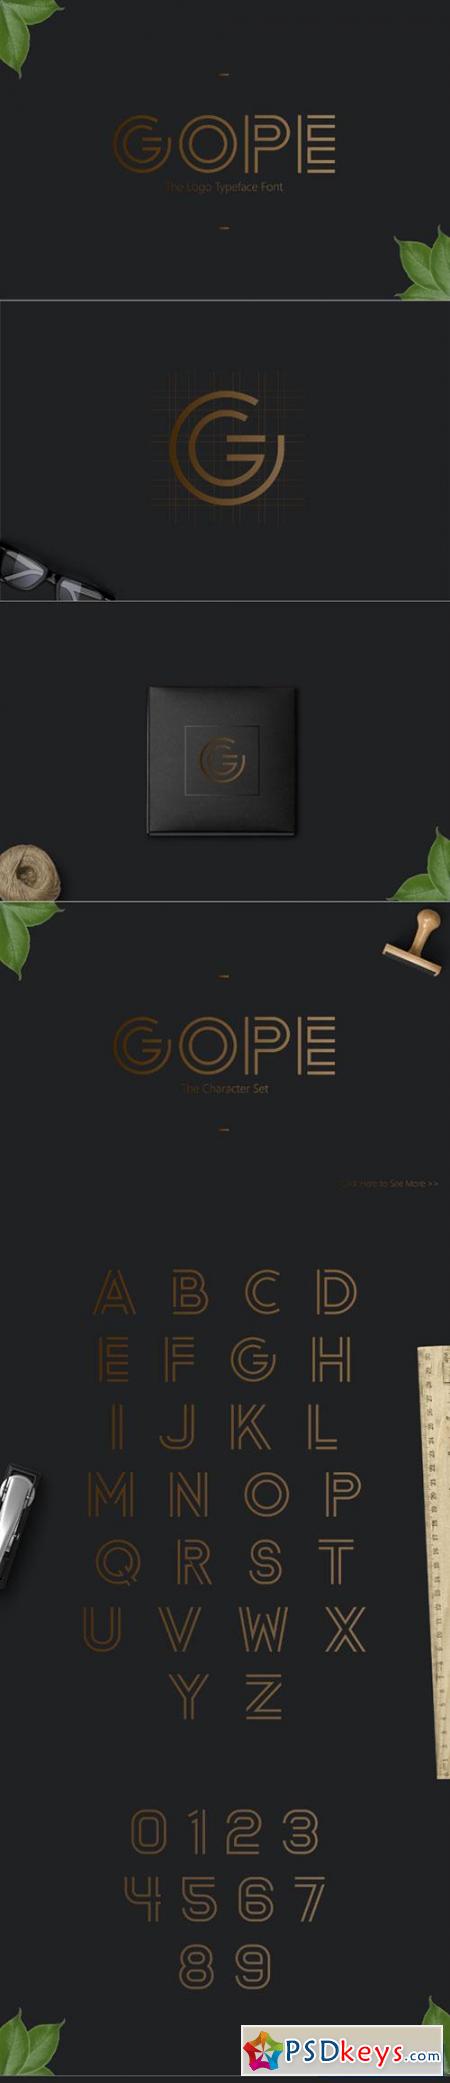 Gope Typeface 20457208